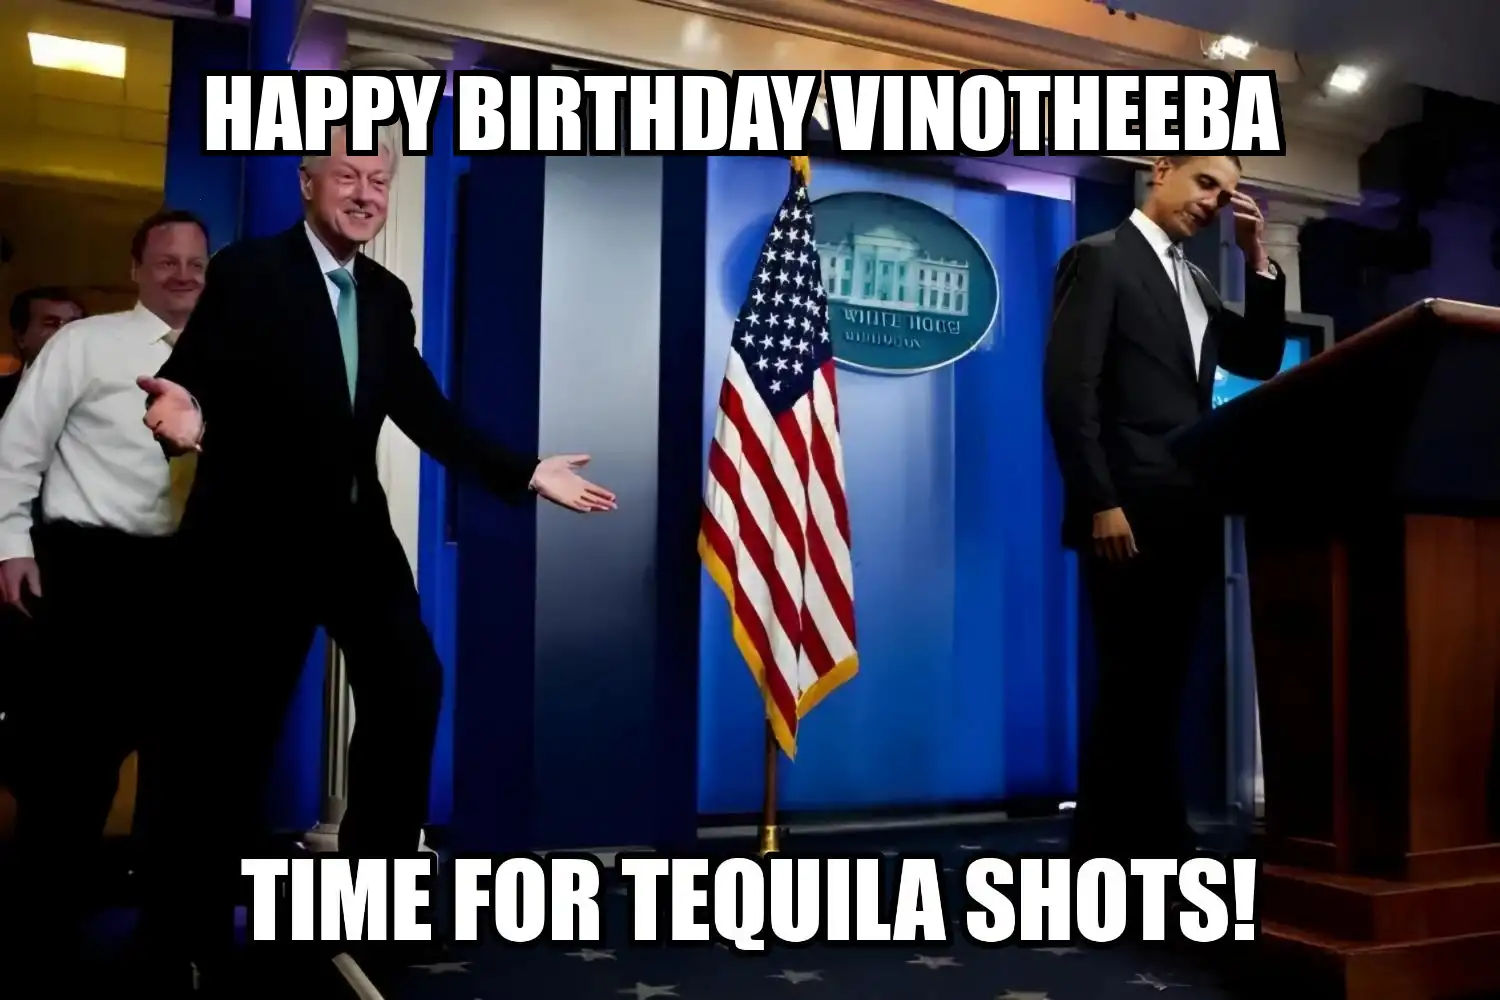 Happy Birthday Vinotheeba Time For Tequila Shots Memes